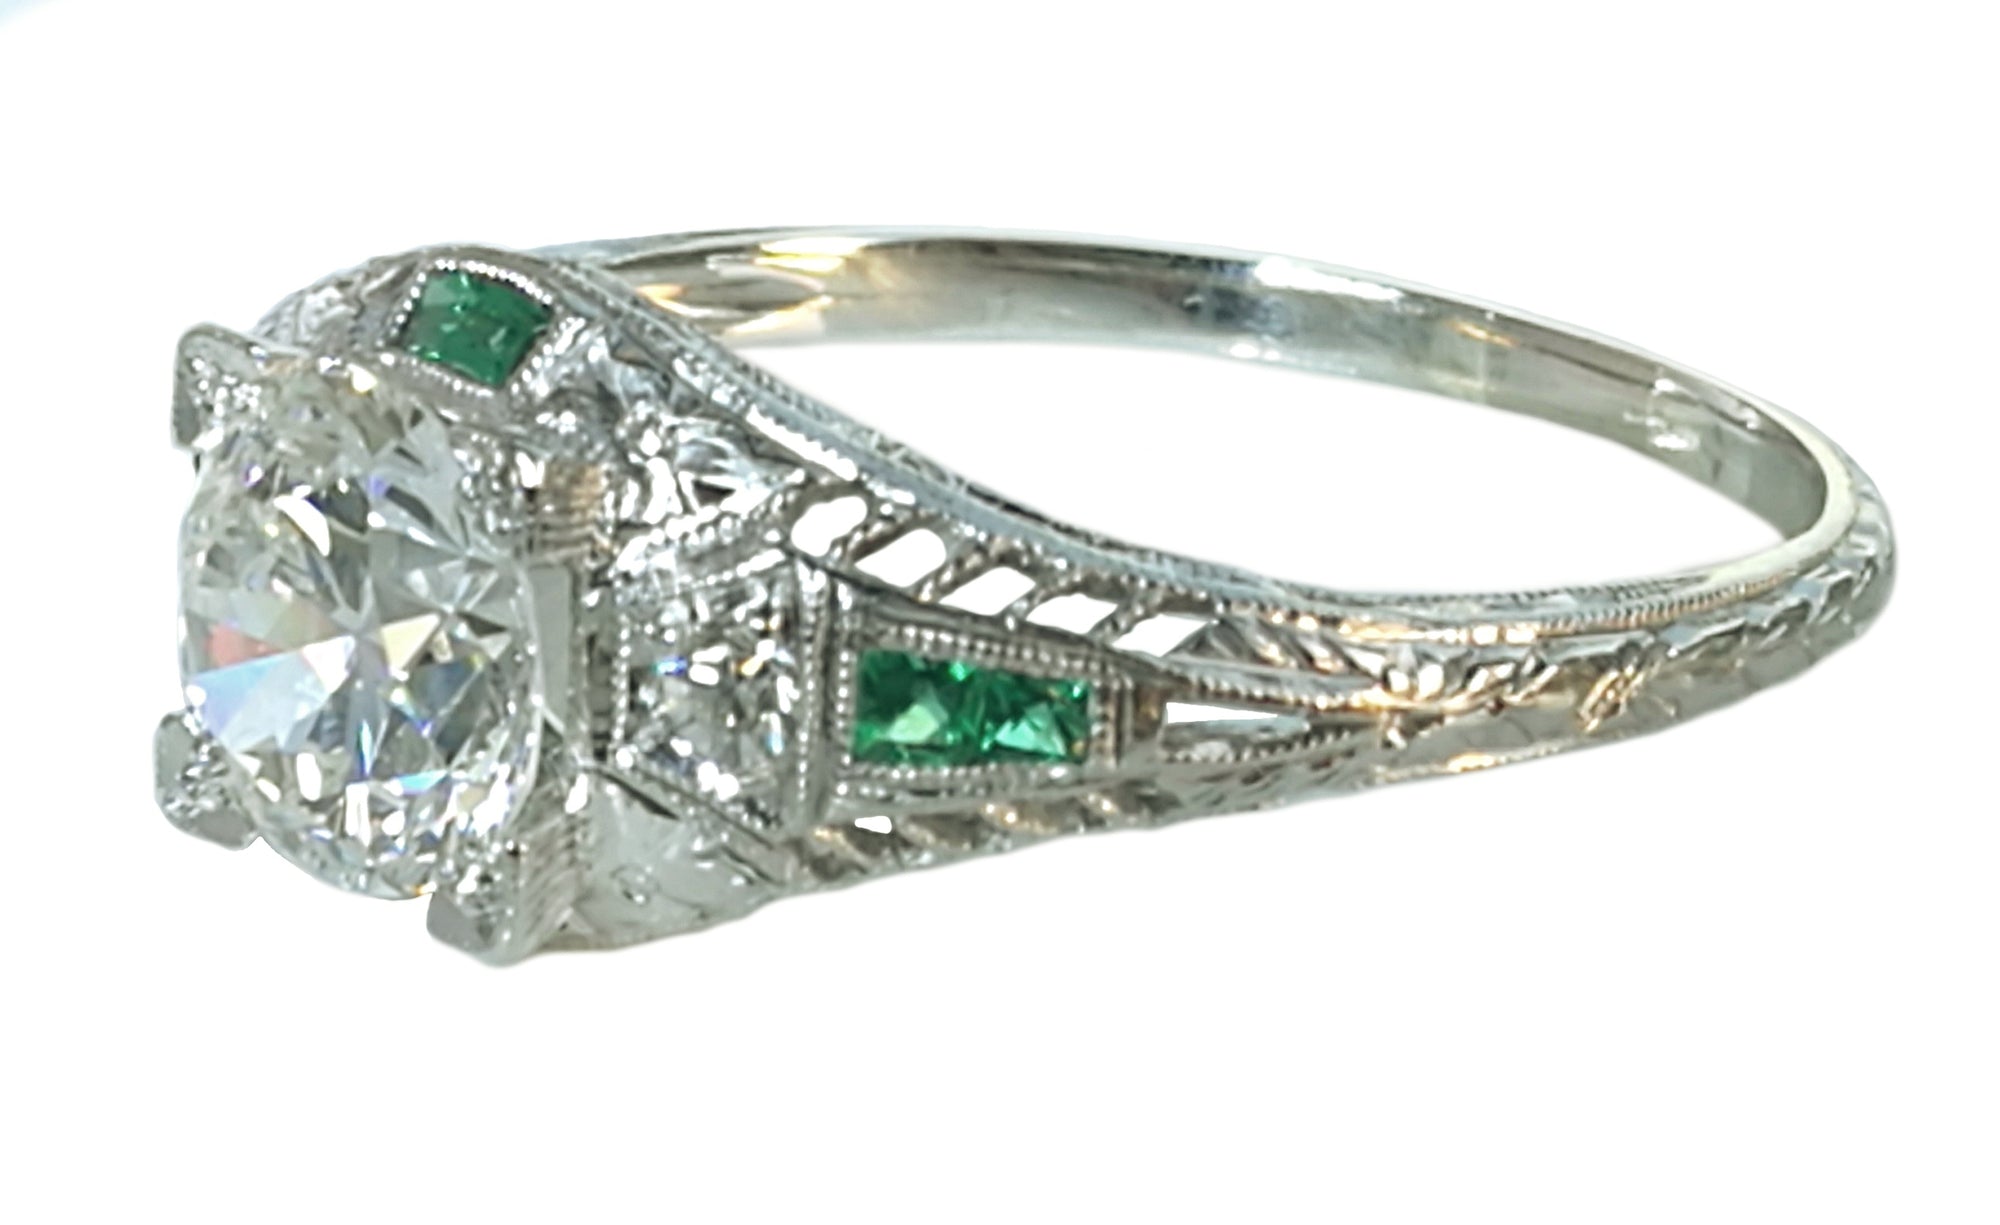 Original 1930s Vintage Art Deco 1.0ct Old Cut Diamond & Emerald Engagement Ring